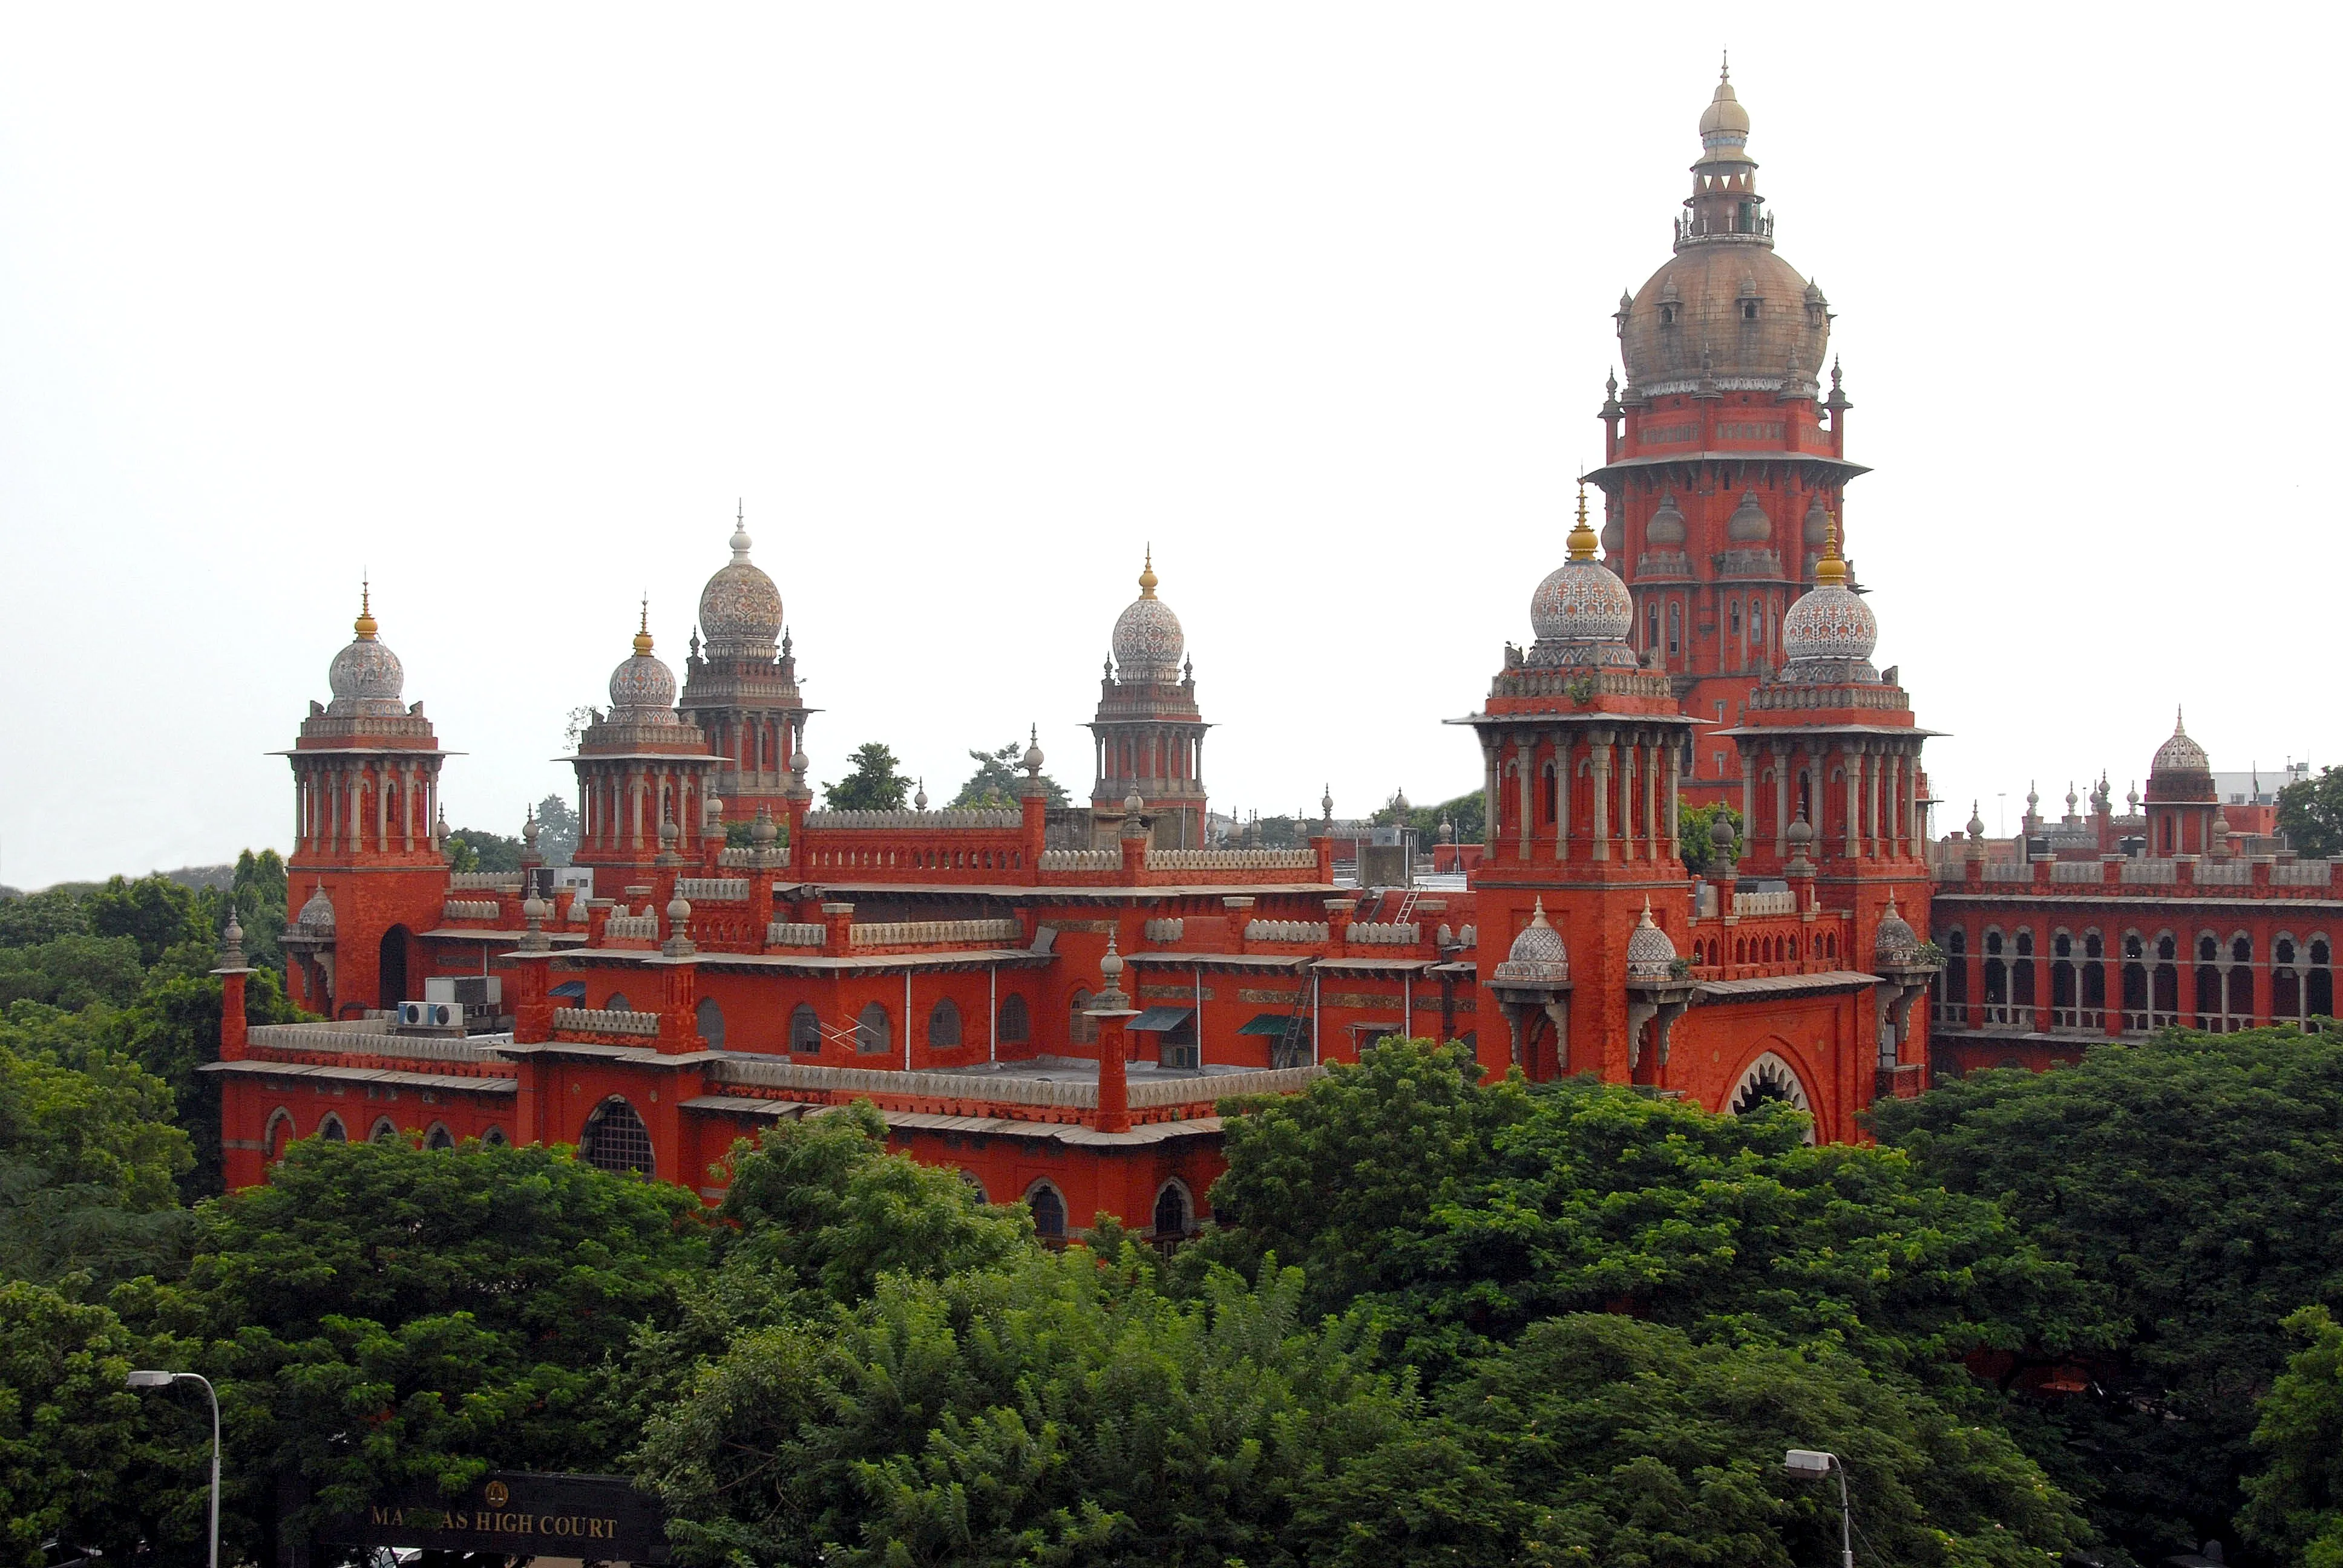 chennai high court news - 'ஒருங்கிணைந்த இந்தியாவை கூறு போட அனுமதிக்க முடியாது' - ஐகோர்ட் கடும் கண்டனம்